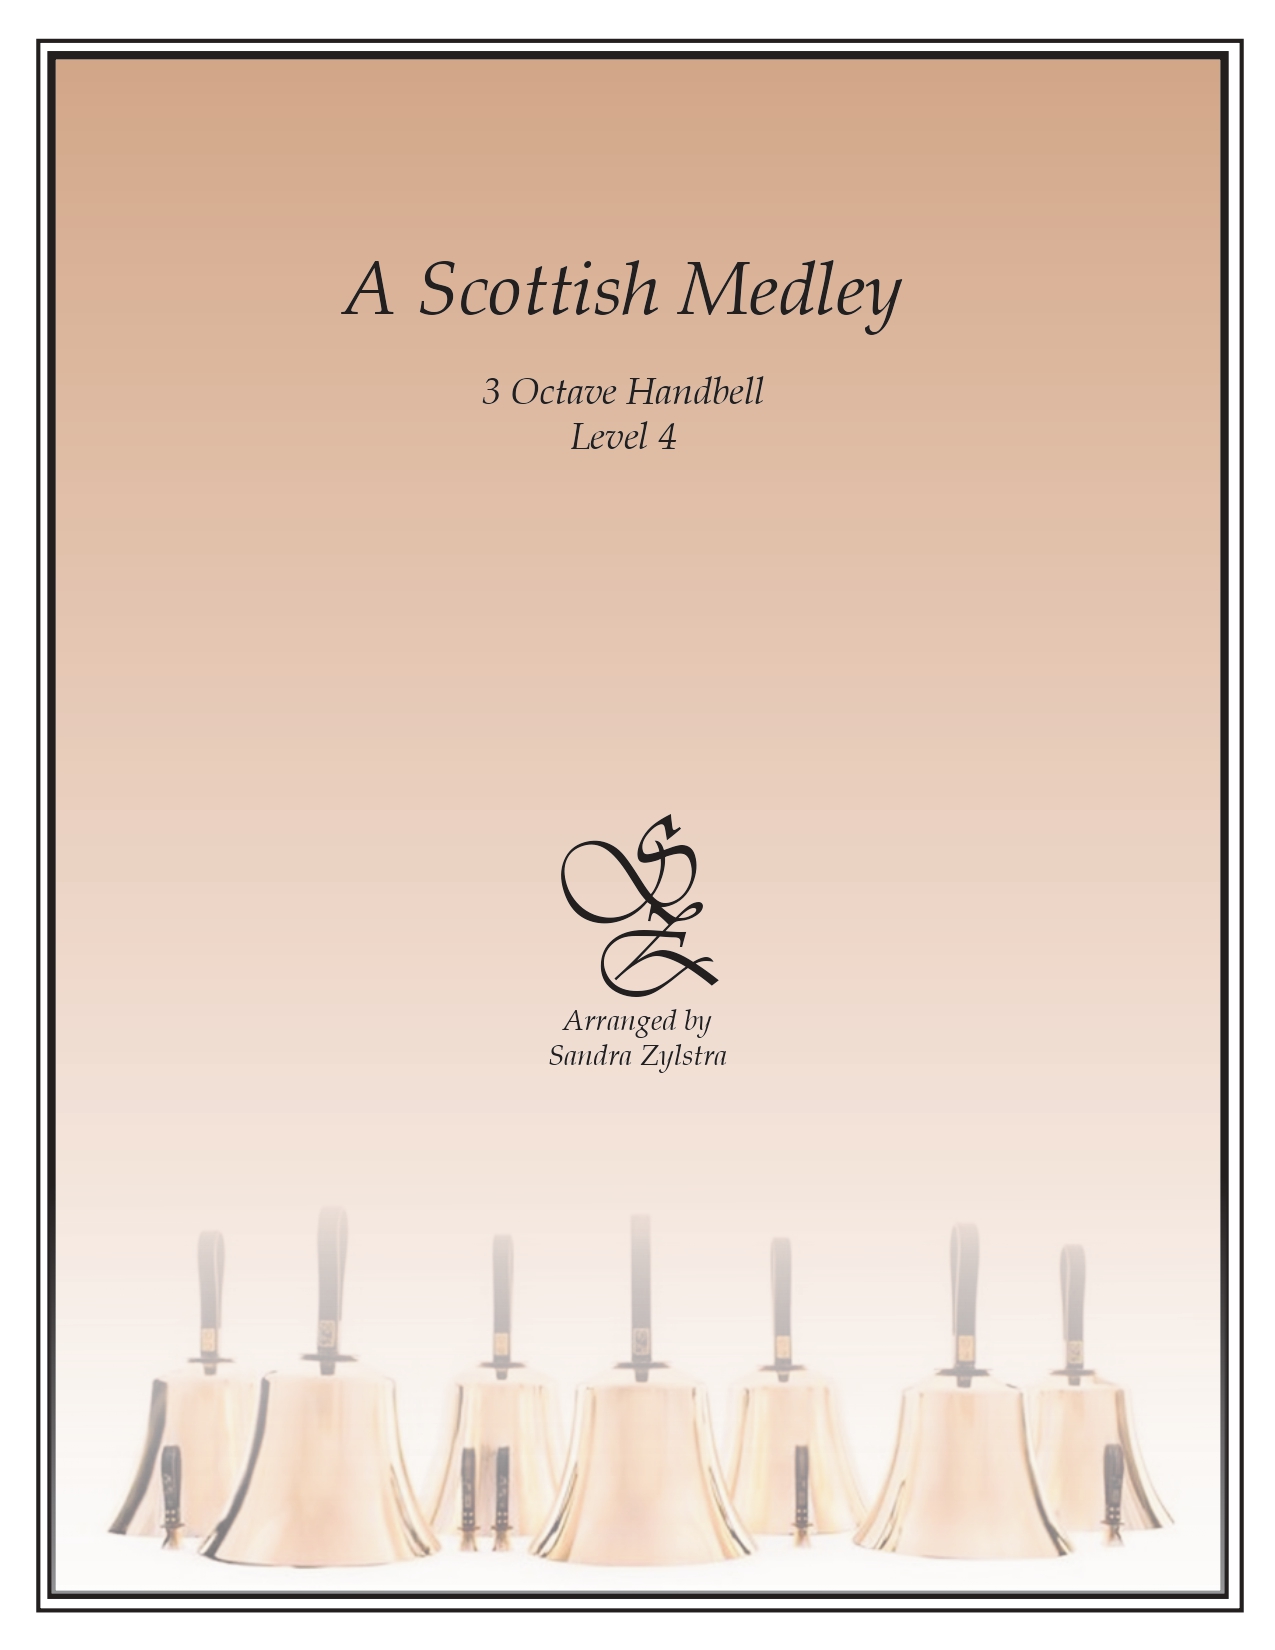 A Scottish Medley 3 octave handbells cover page 00011